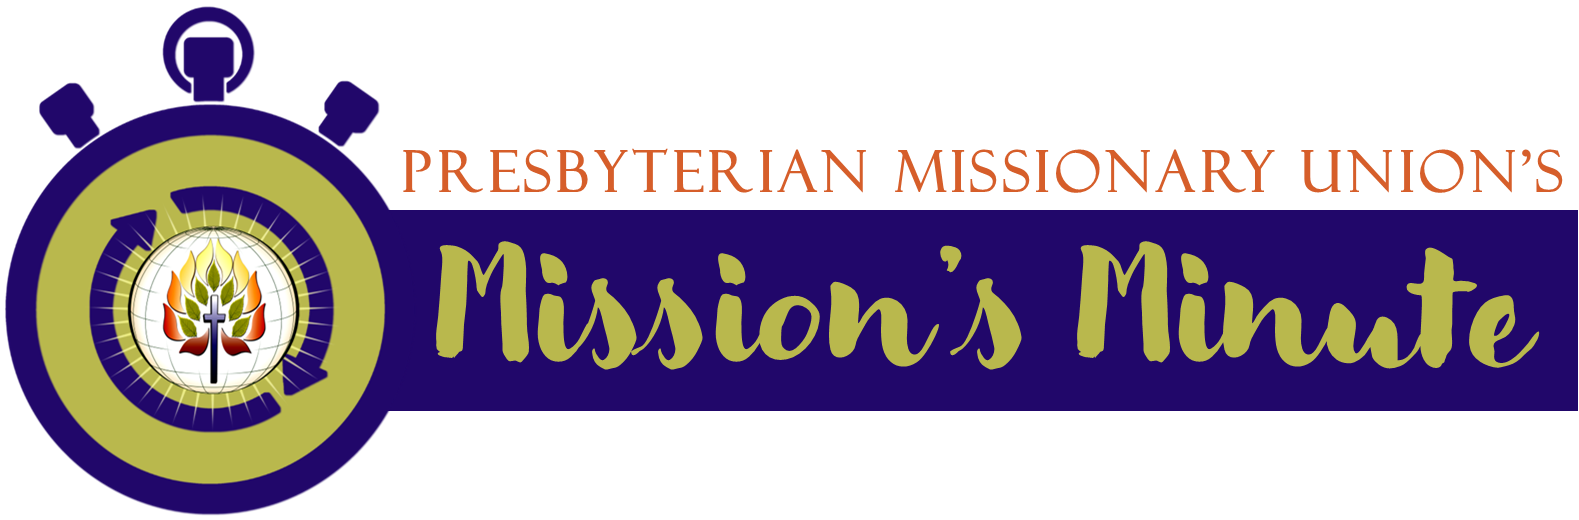 Missions Minute full logo